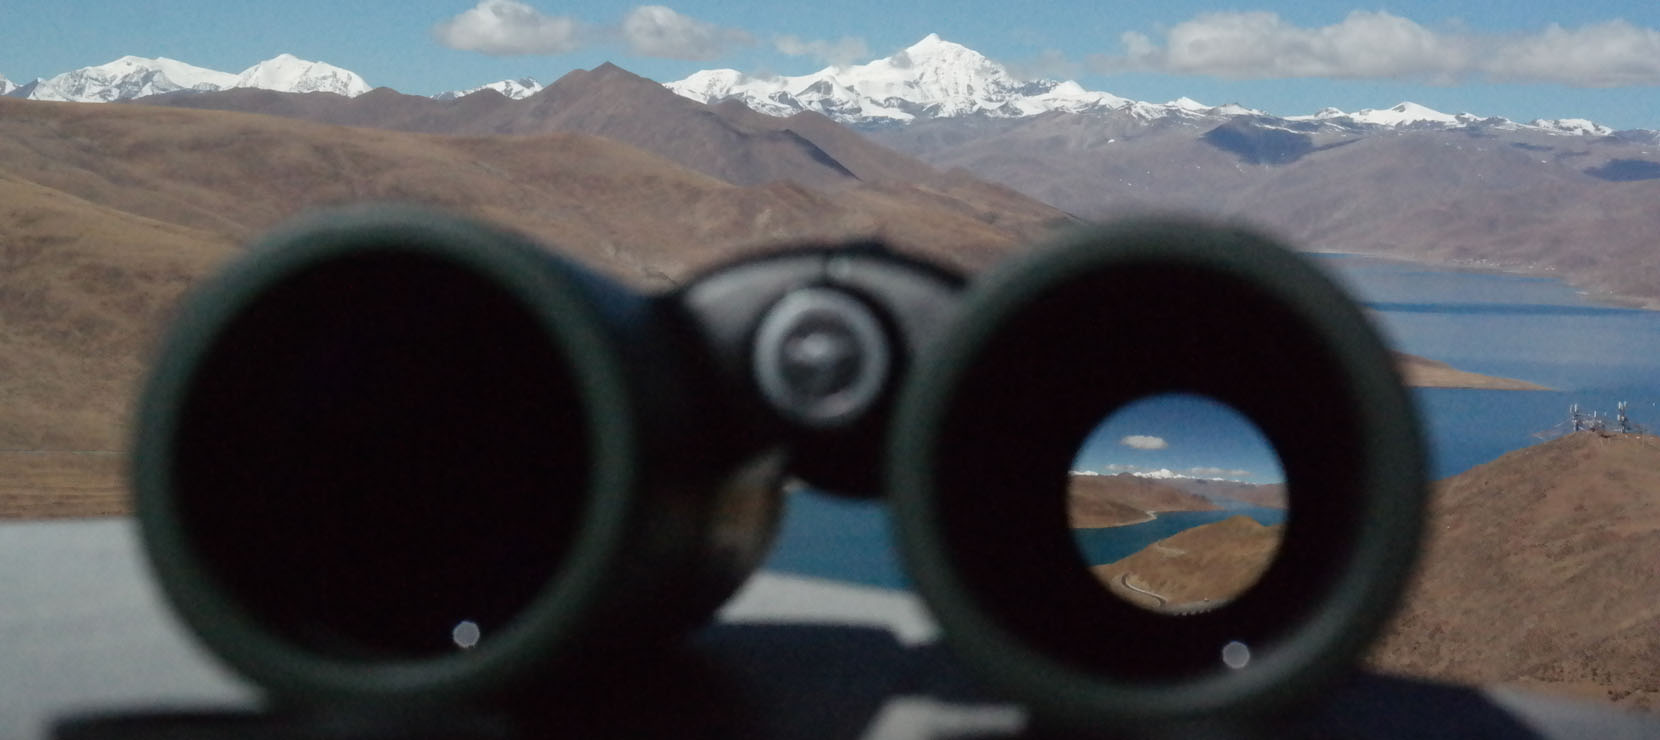 Shuntu ED Field Flattener Binoculars